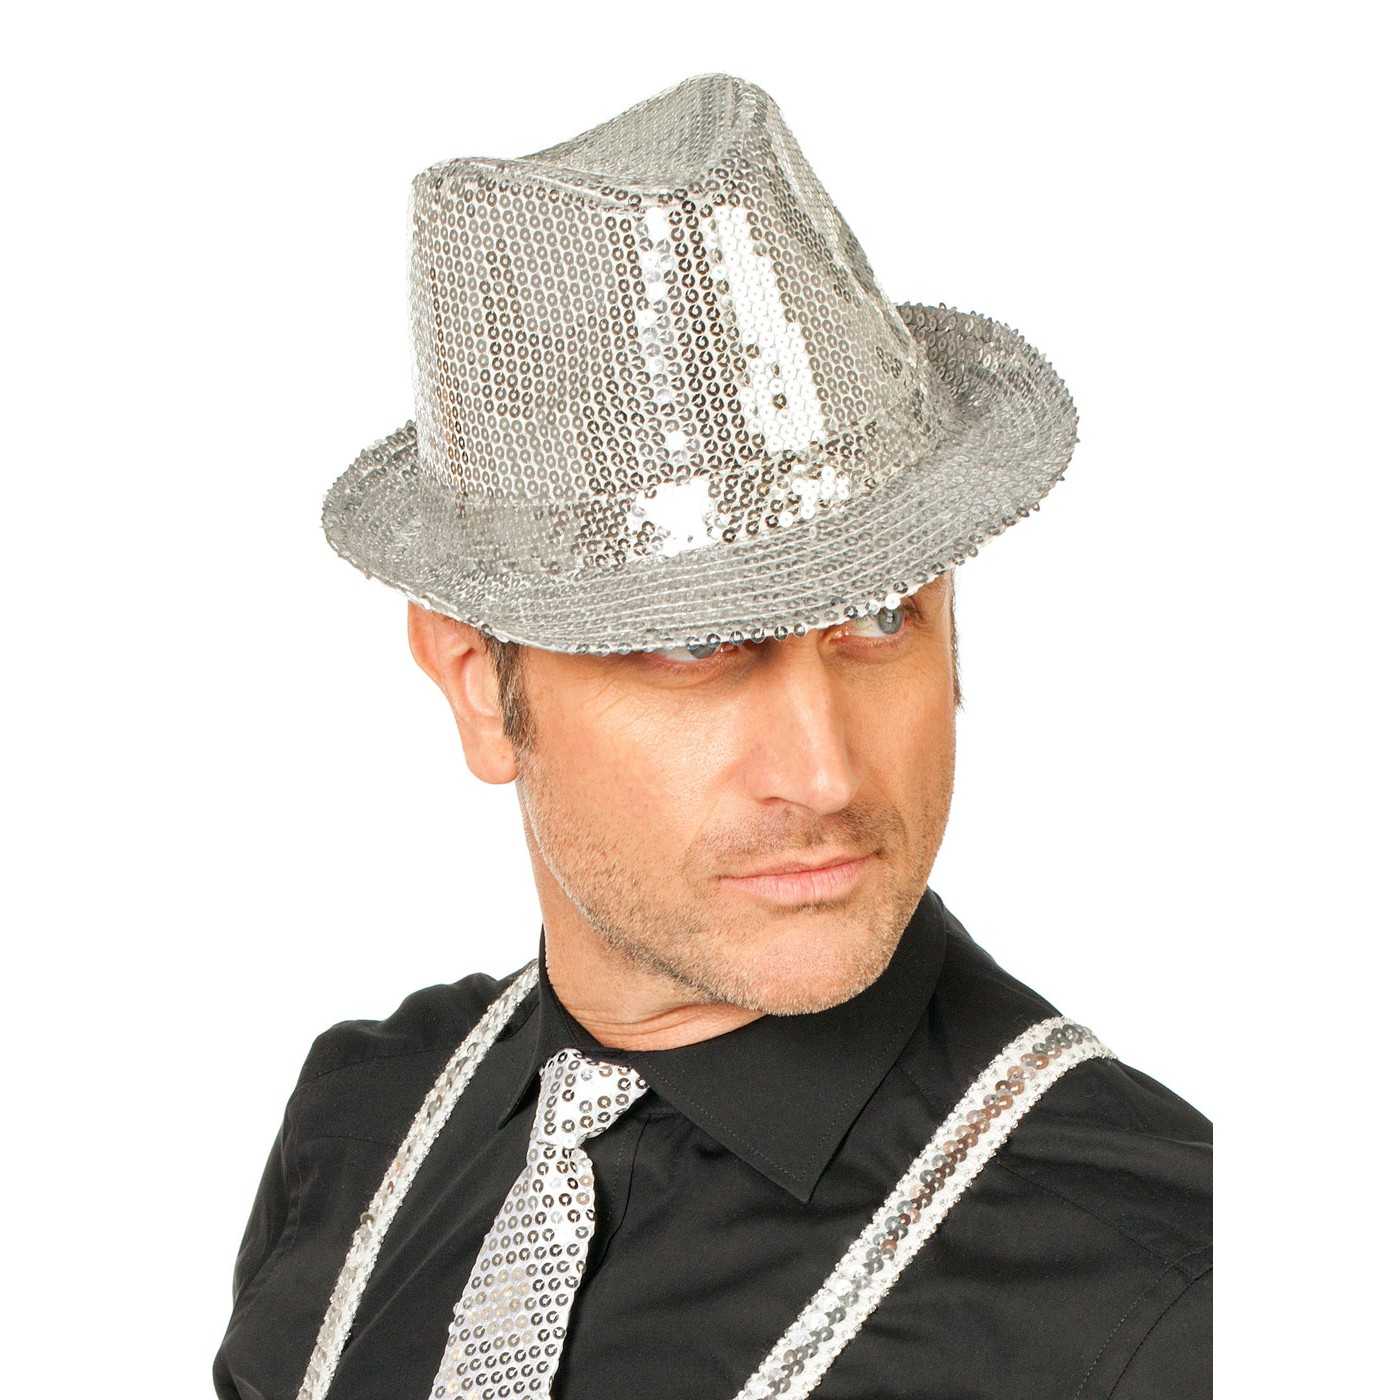 Lock co hatters - бренд шляп и головных уборов